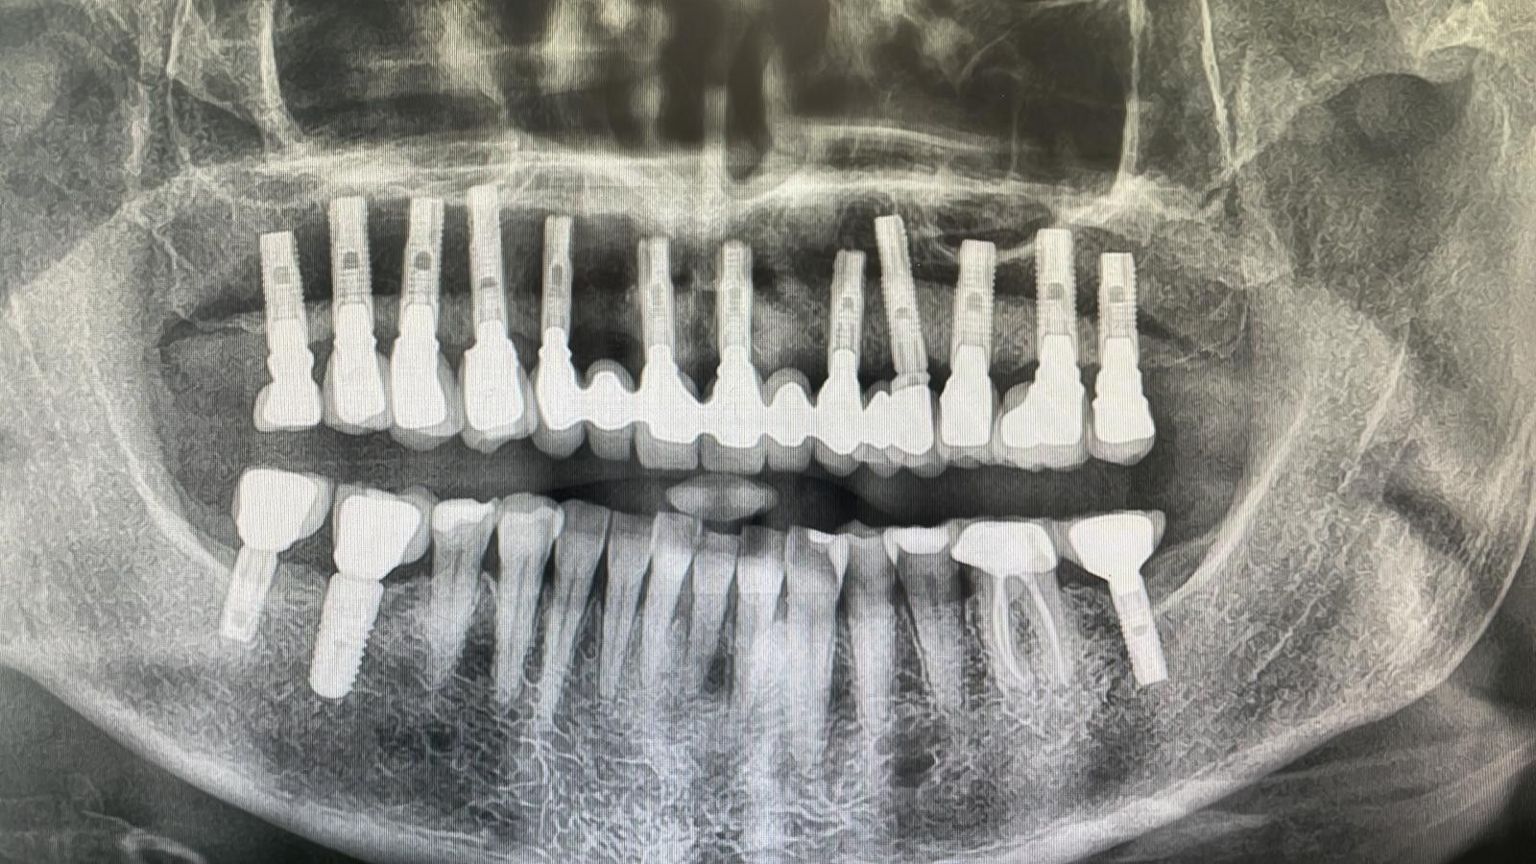 X-ray of Sarah's implants